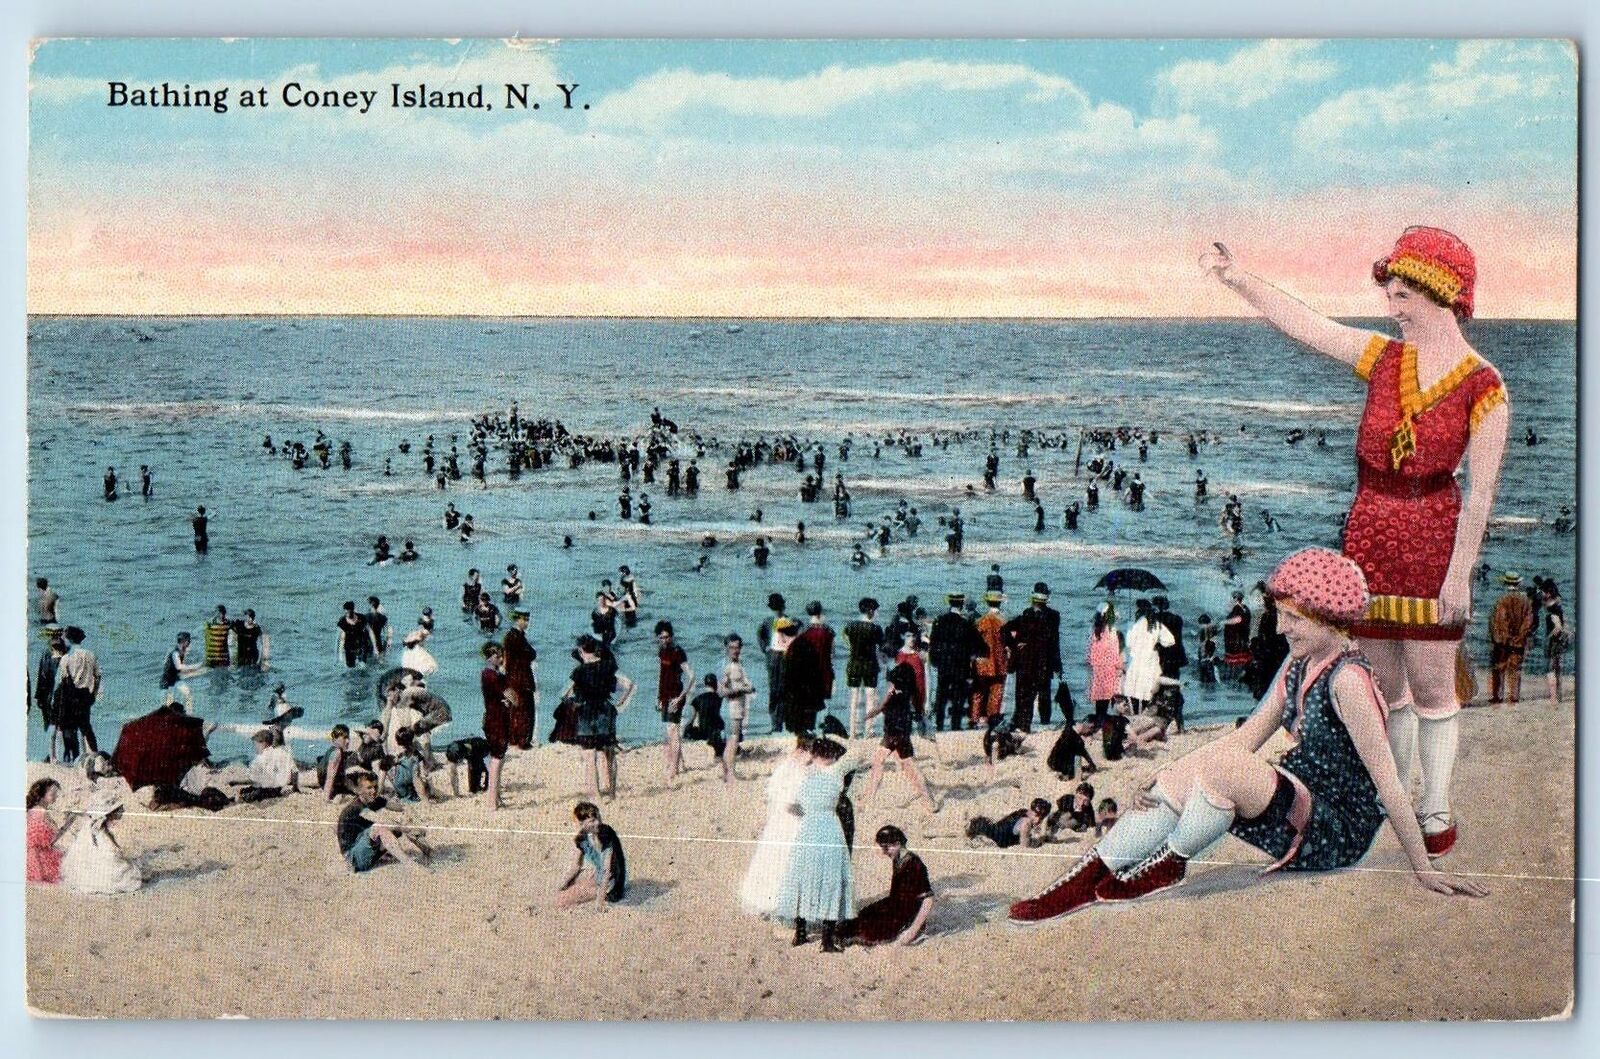 Coney Island New York NY Postcard Scene Of People Bathing Beach c1920's Antique